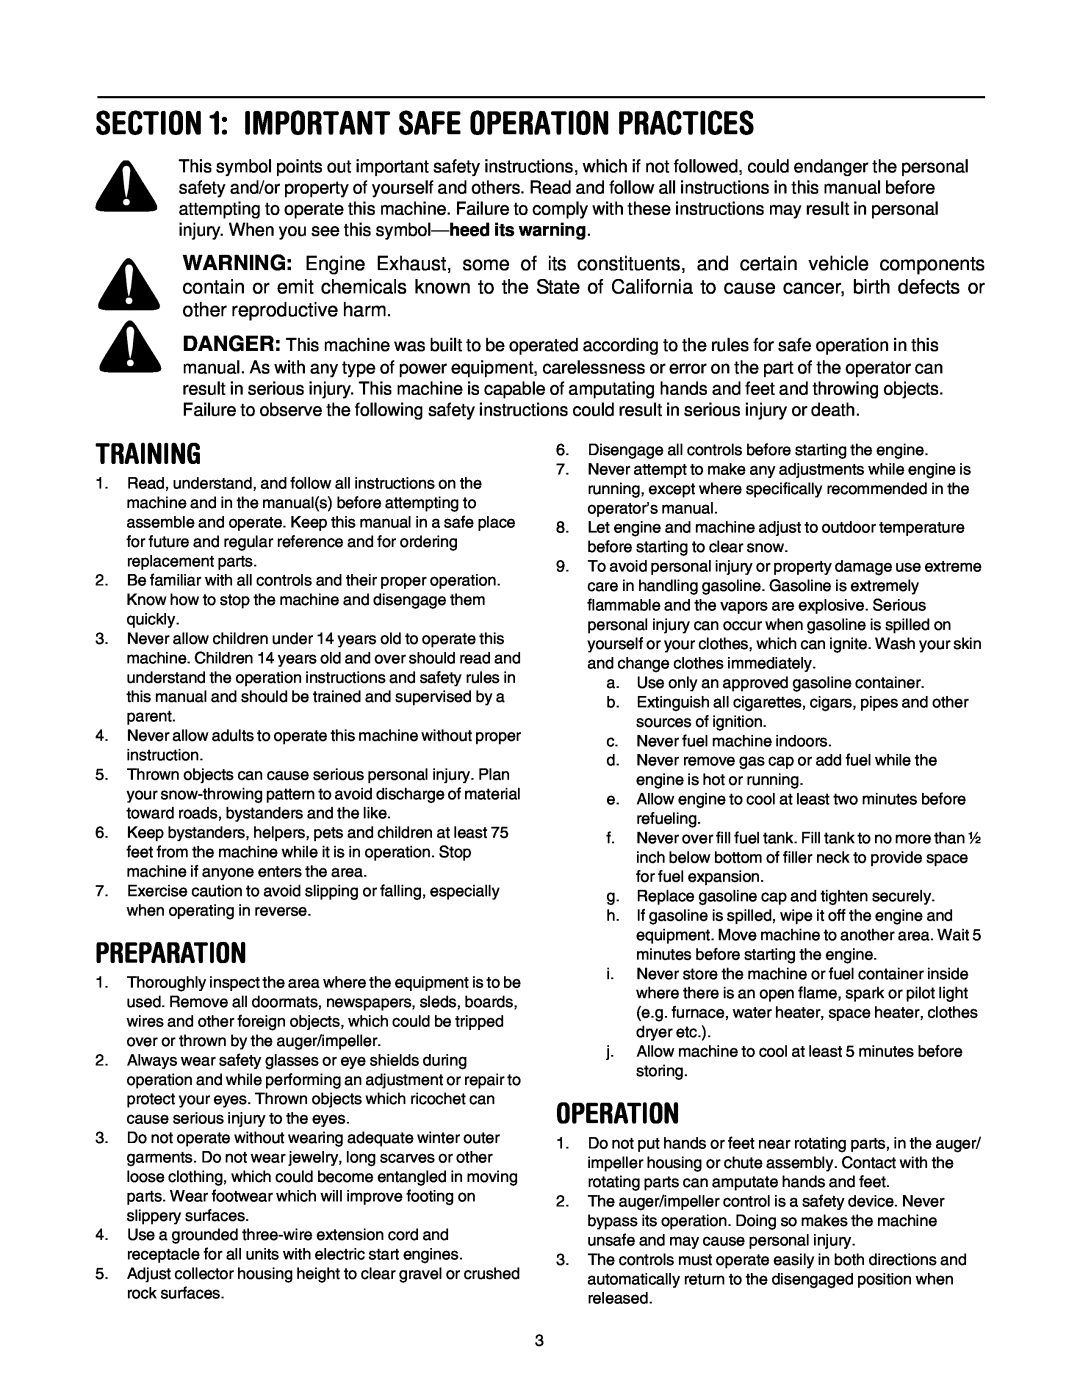 Troy-Bilt 10530 manual Important Safe Operation Practices, Training, Preparation 